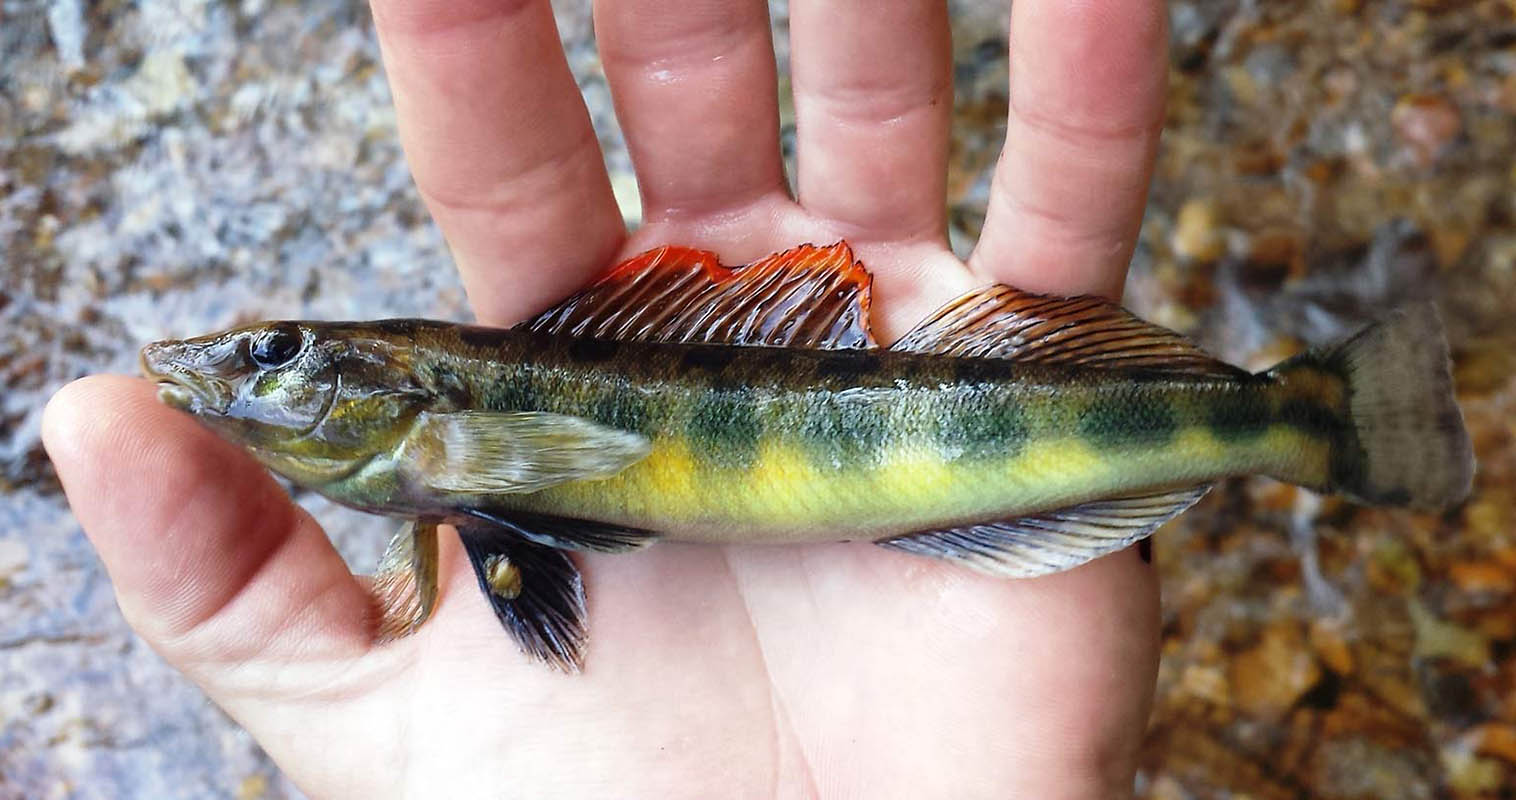 TVA announces New Fish Species found in Duck River - Clarksville